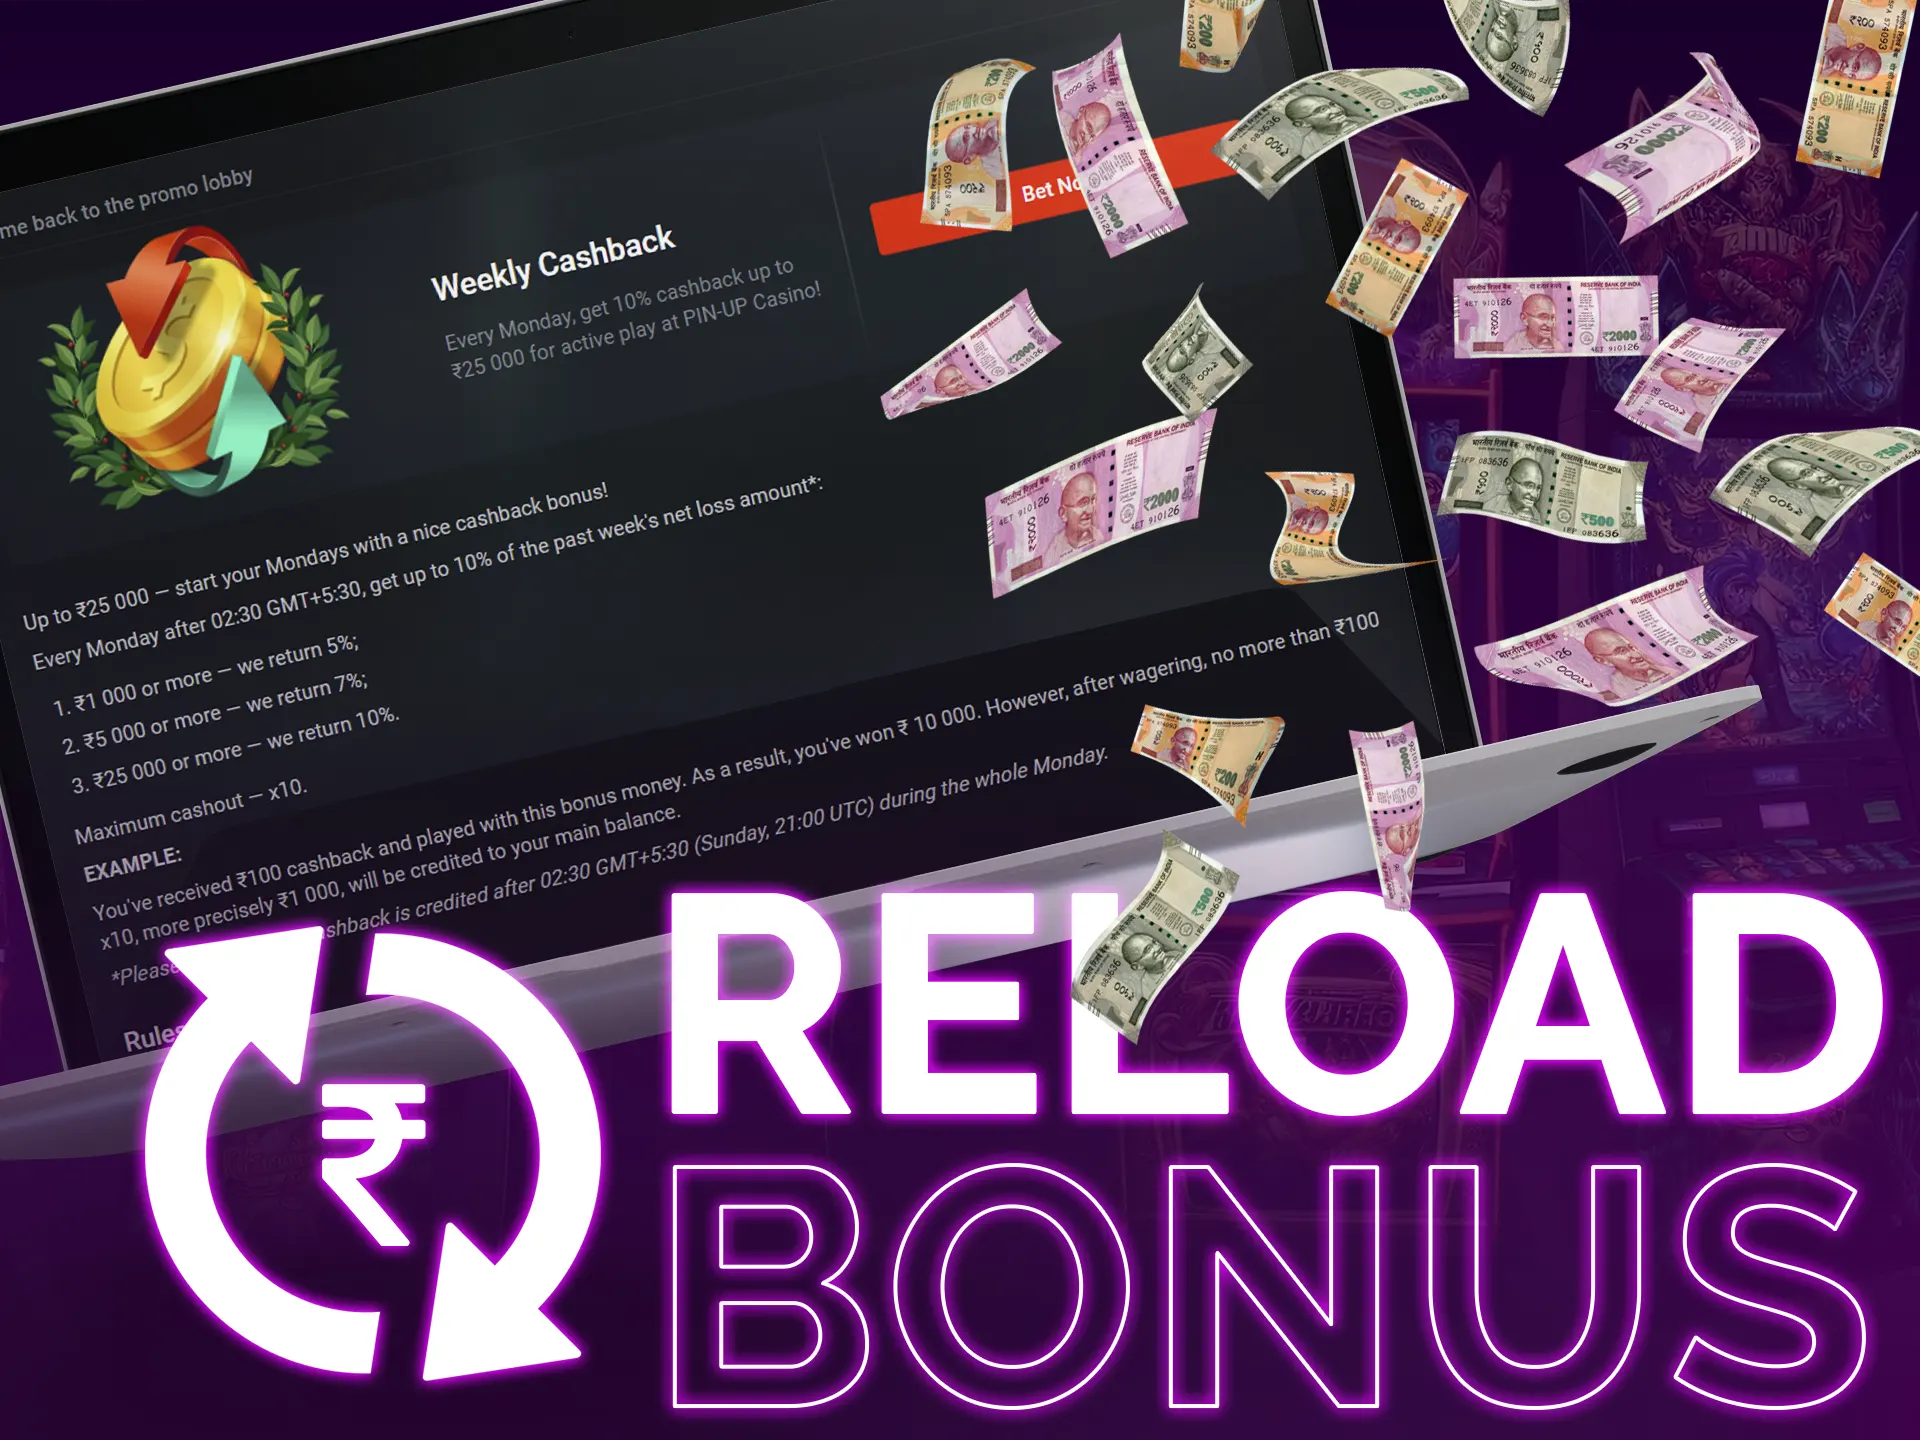 Meet the reload deposit bonus!